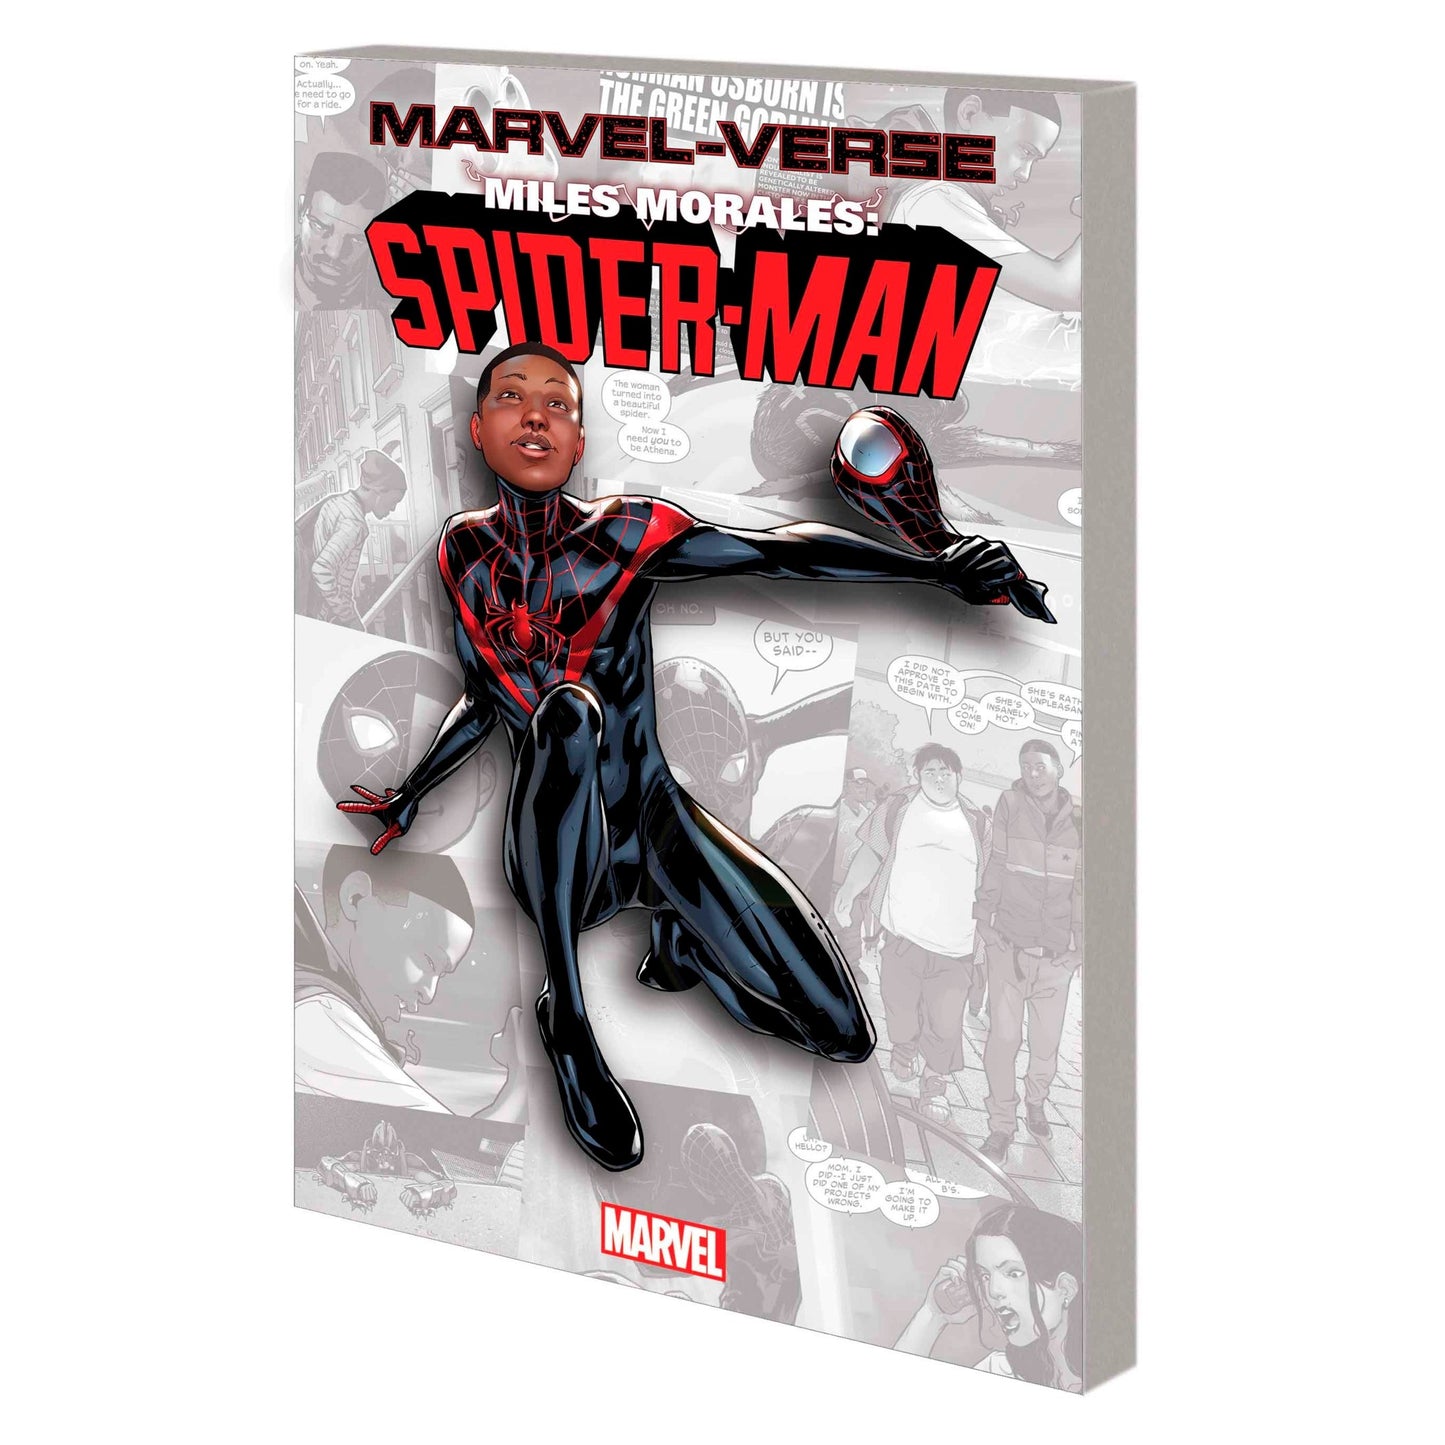 Marvel-Verse Miles Morales Spider-Man